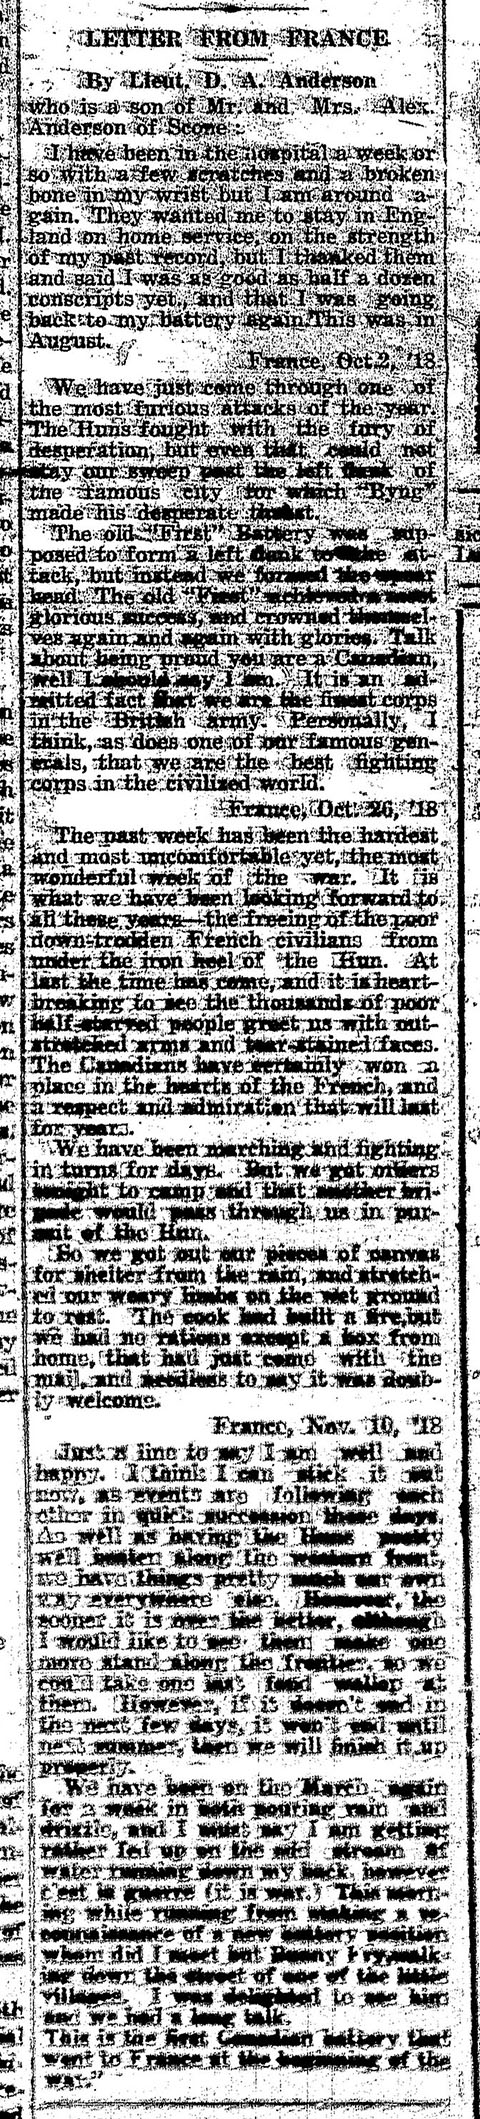 The Chesley Enterprise, December 19, 1918